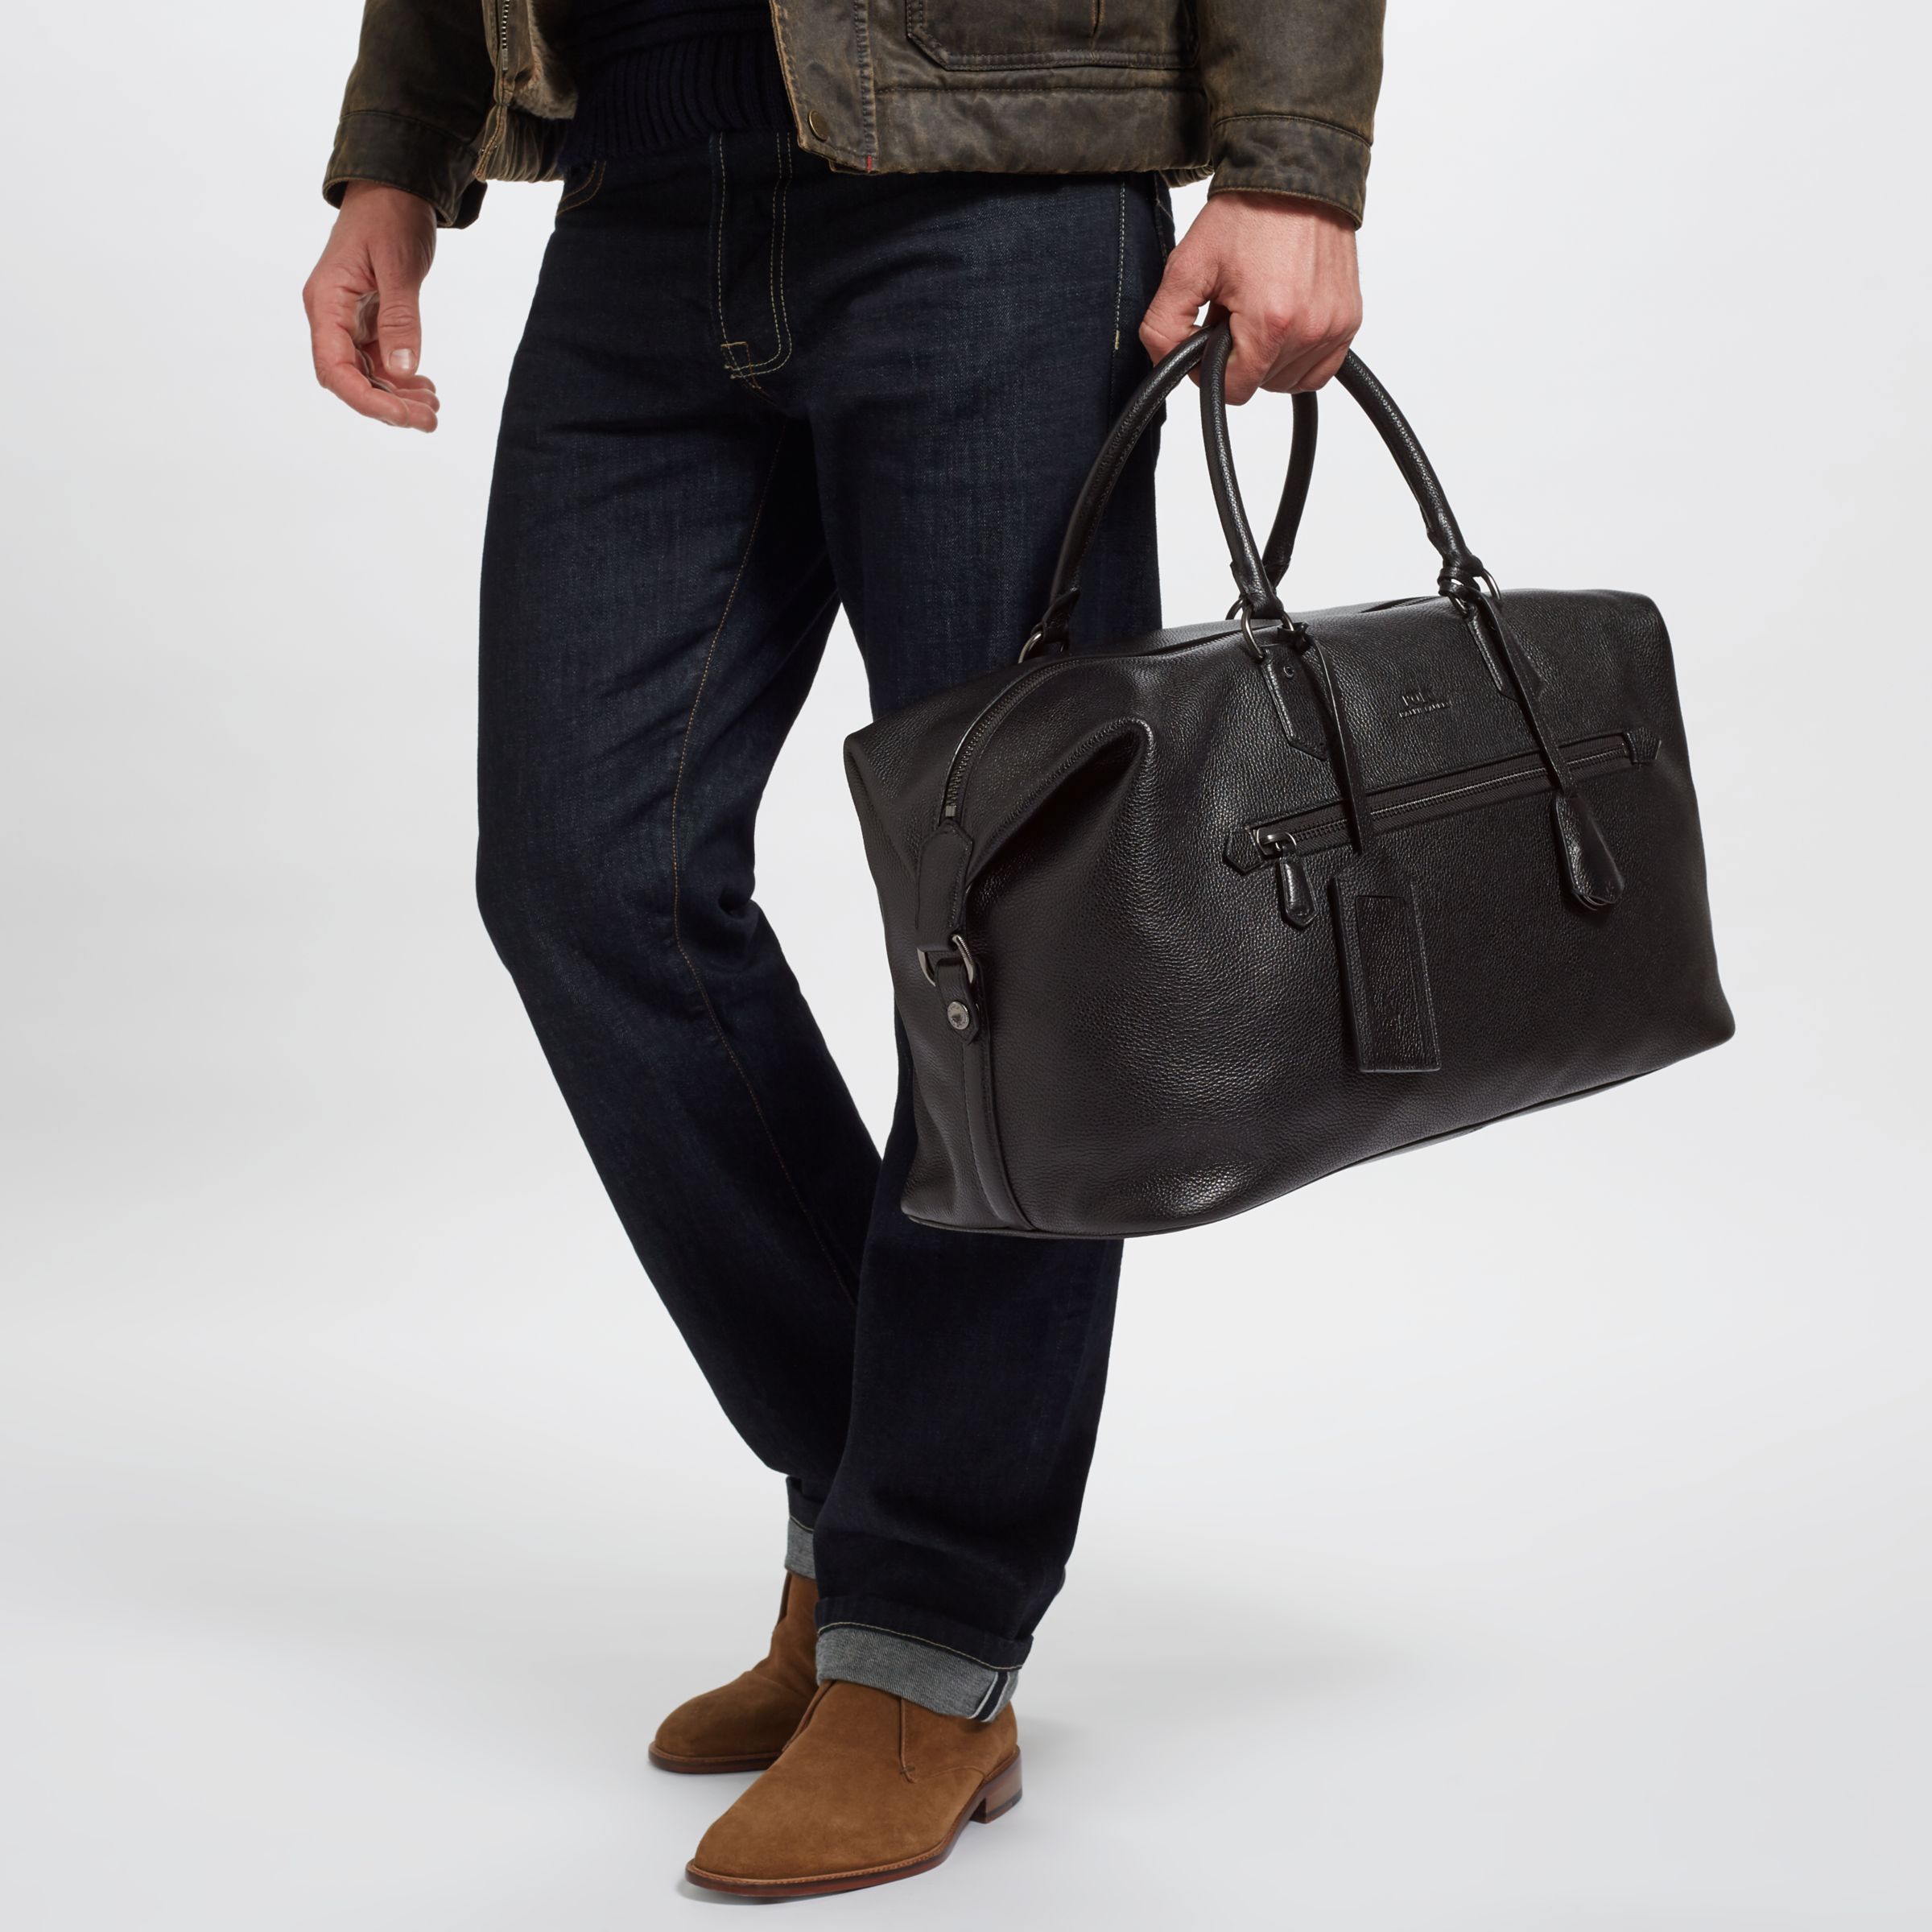 Polo Ralph Lauren Pebble Leather Duffle Bag, Black at John Lewis & Partners